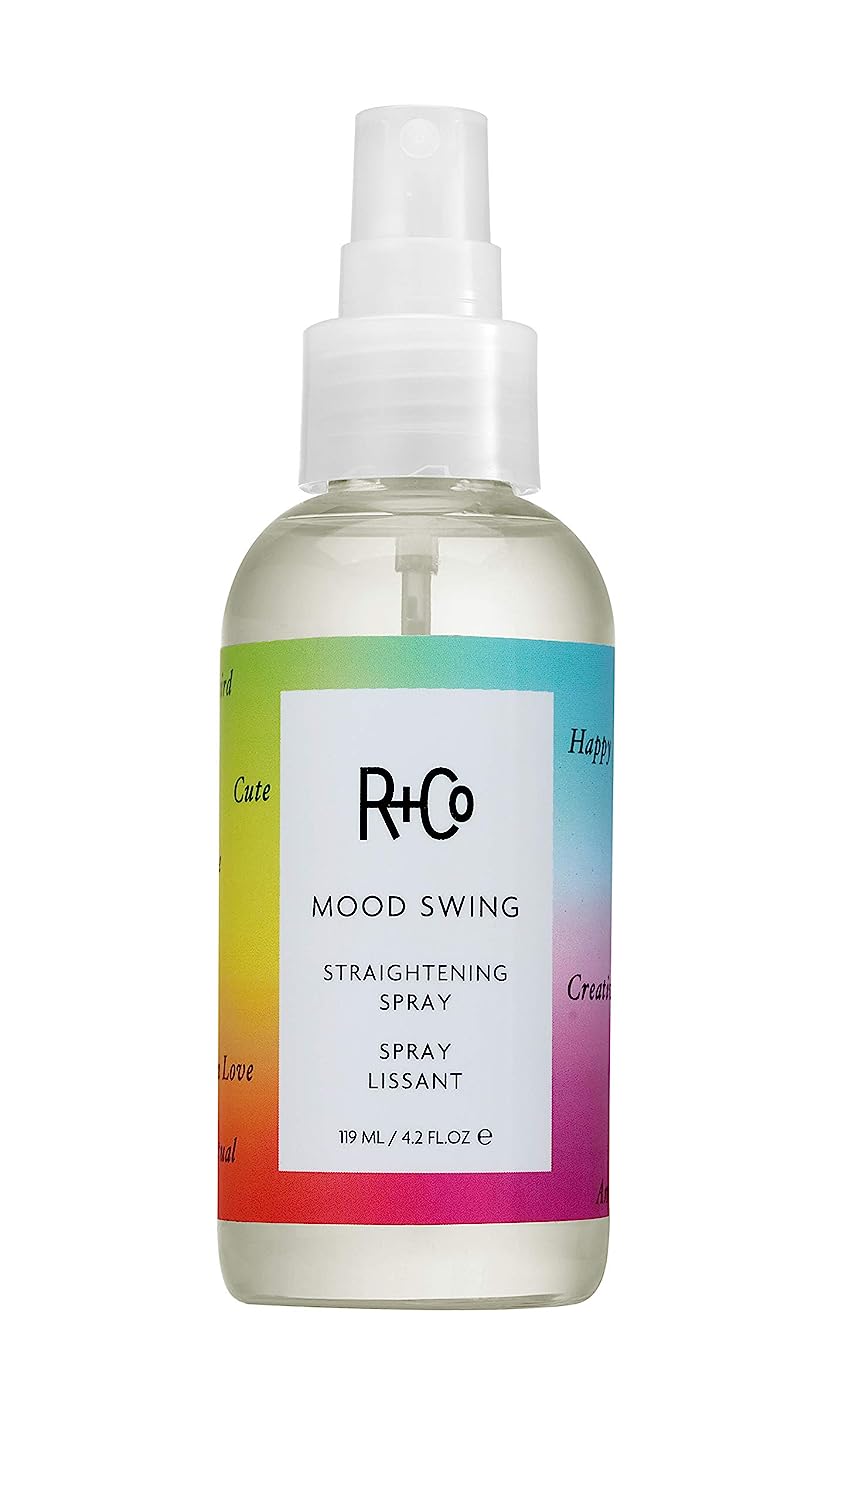 R+Co Mood Swing Straightening Spray | Shine + Humidity [...]